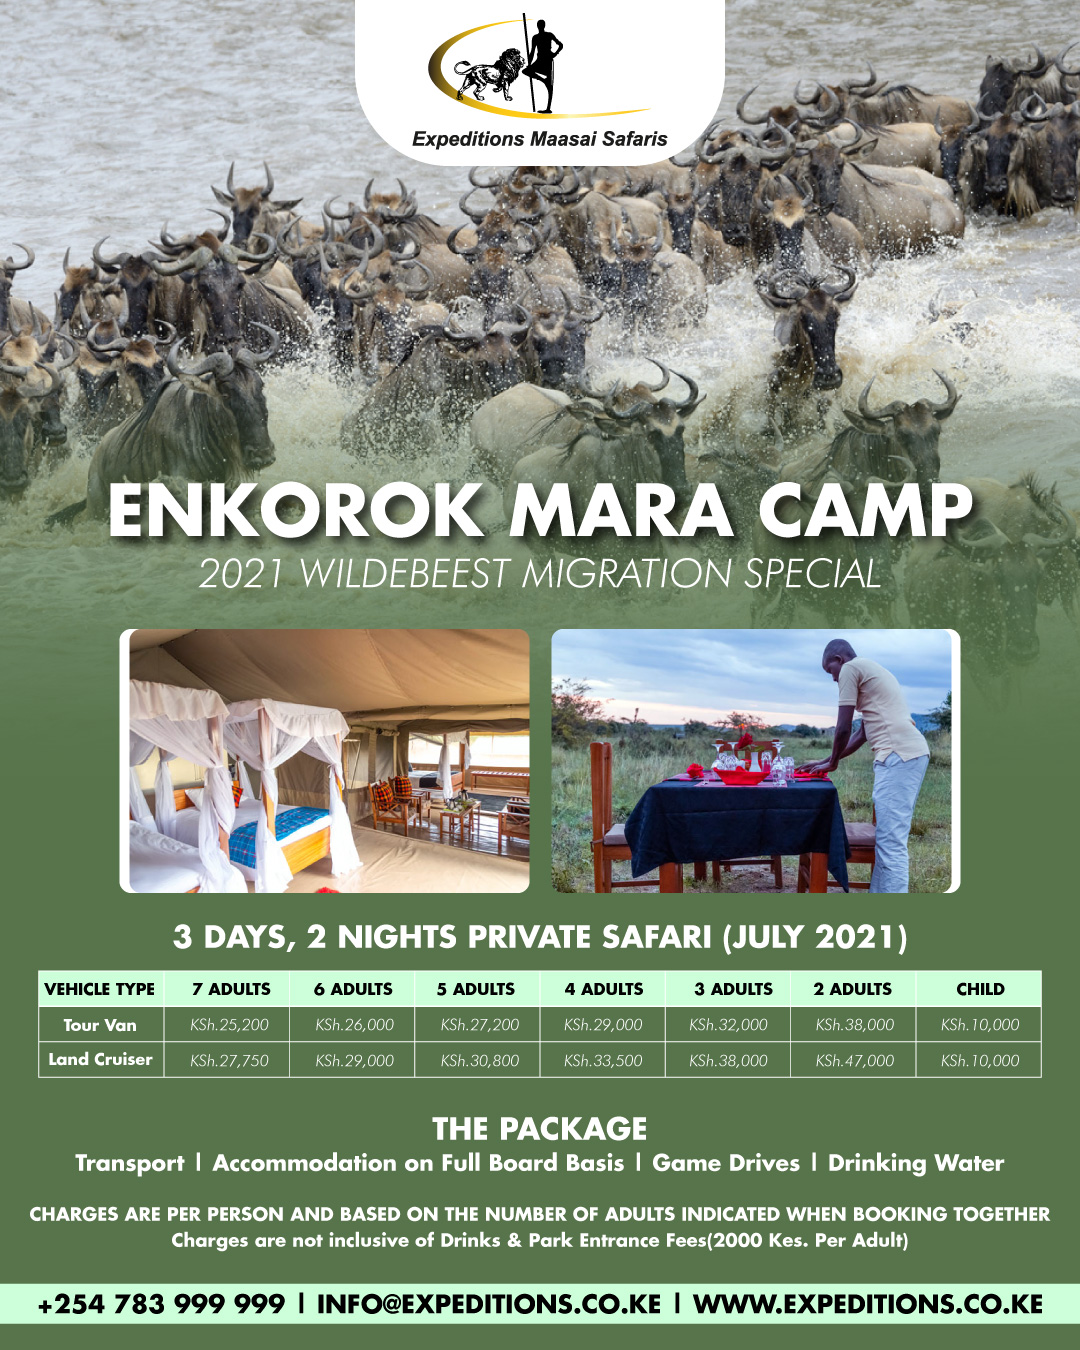 Enjoy the best rates for Enkorok Mara Camp this wildebeest Migration season